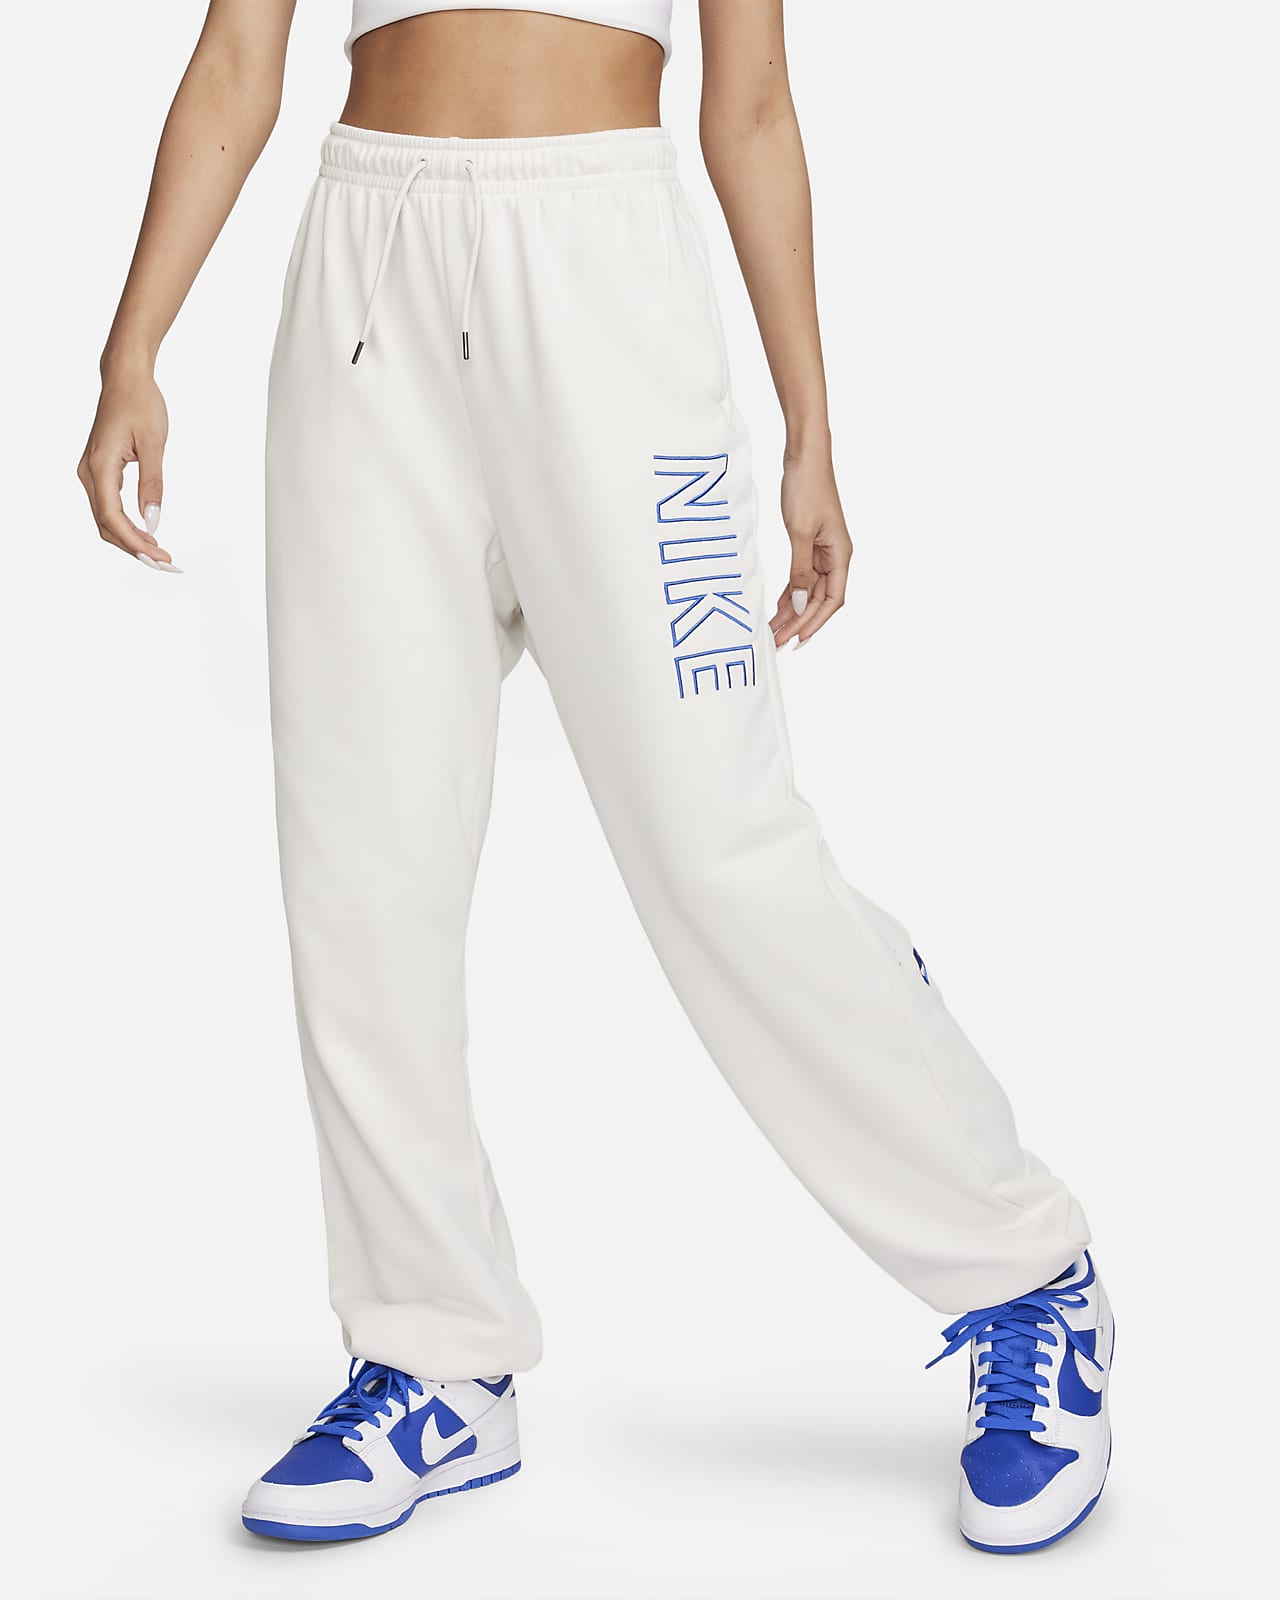 Voorwaarde Leonardoda Ingrijpen Nike Sportswear oversized joggingbroek met hoge taille voor dames. Nike BE